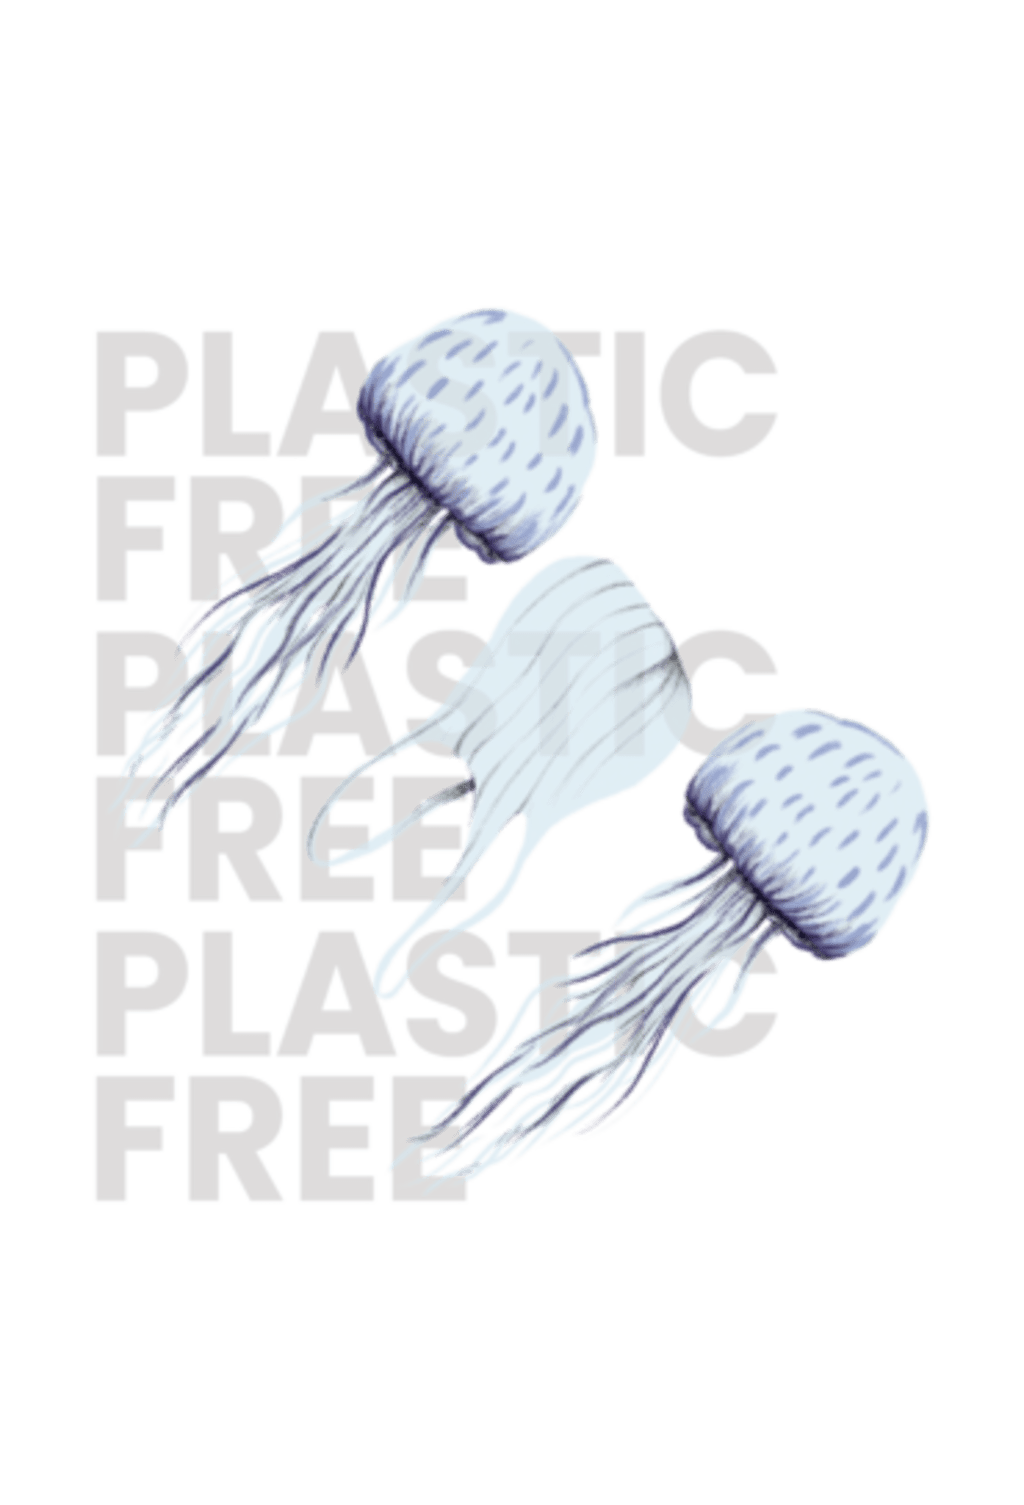 Plastic Free